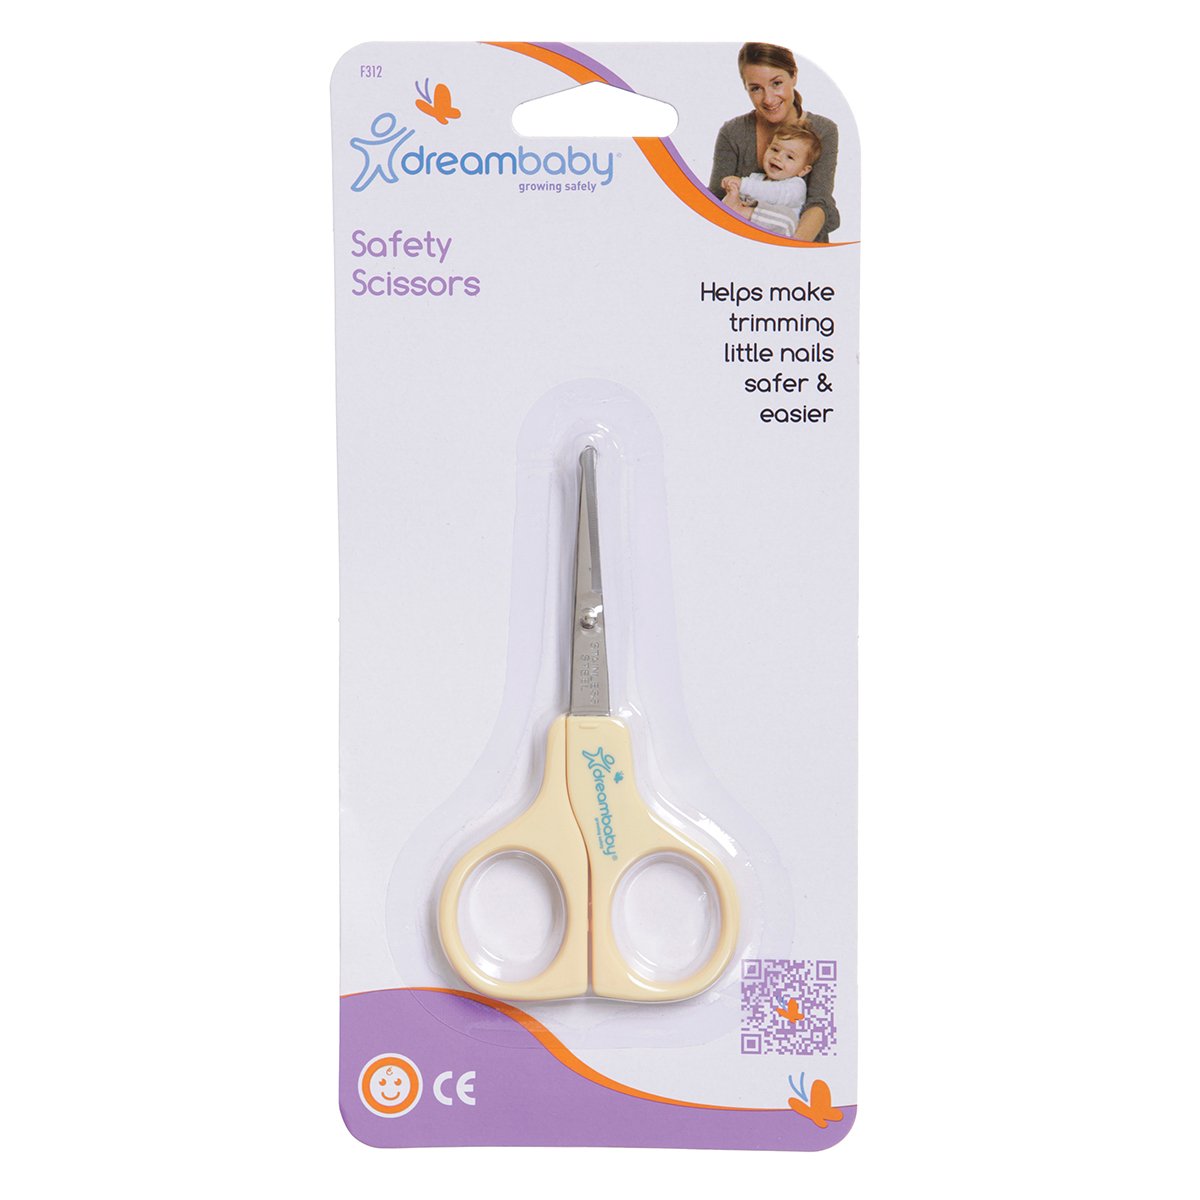 Dreambaby Baby Safety Scissors - 309903